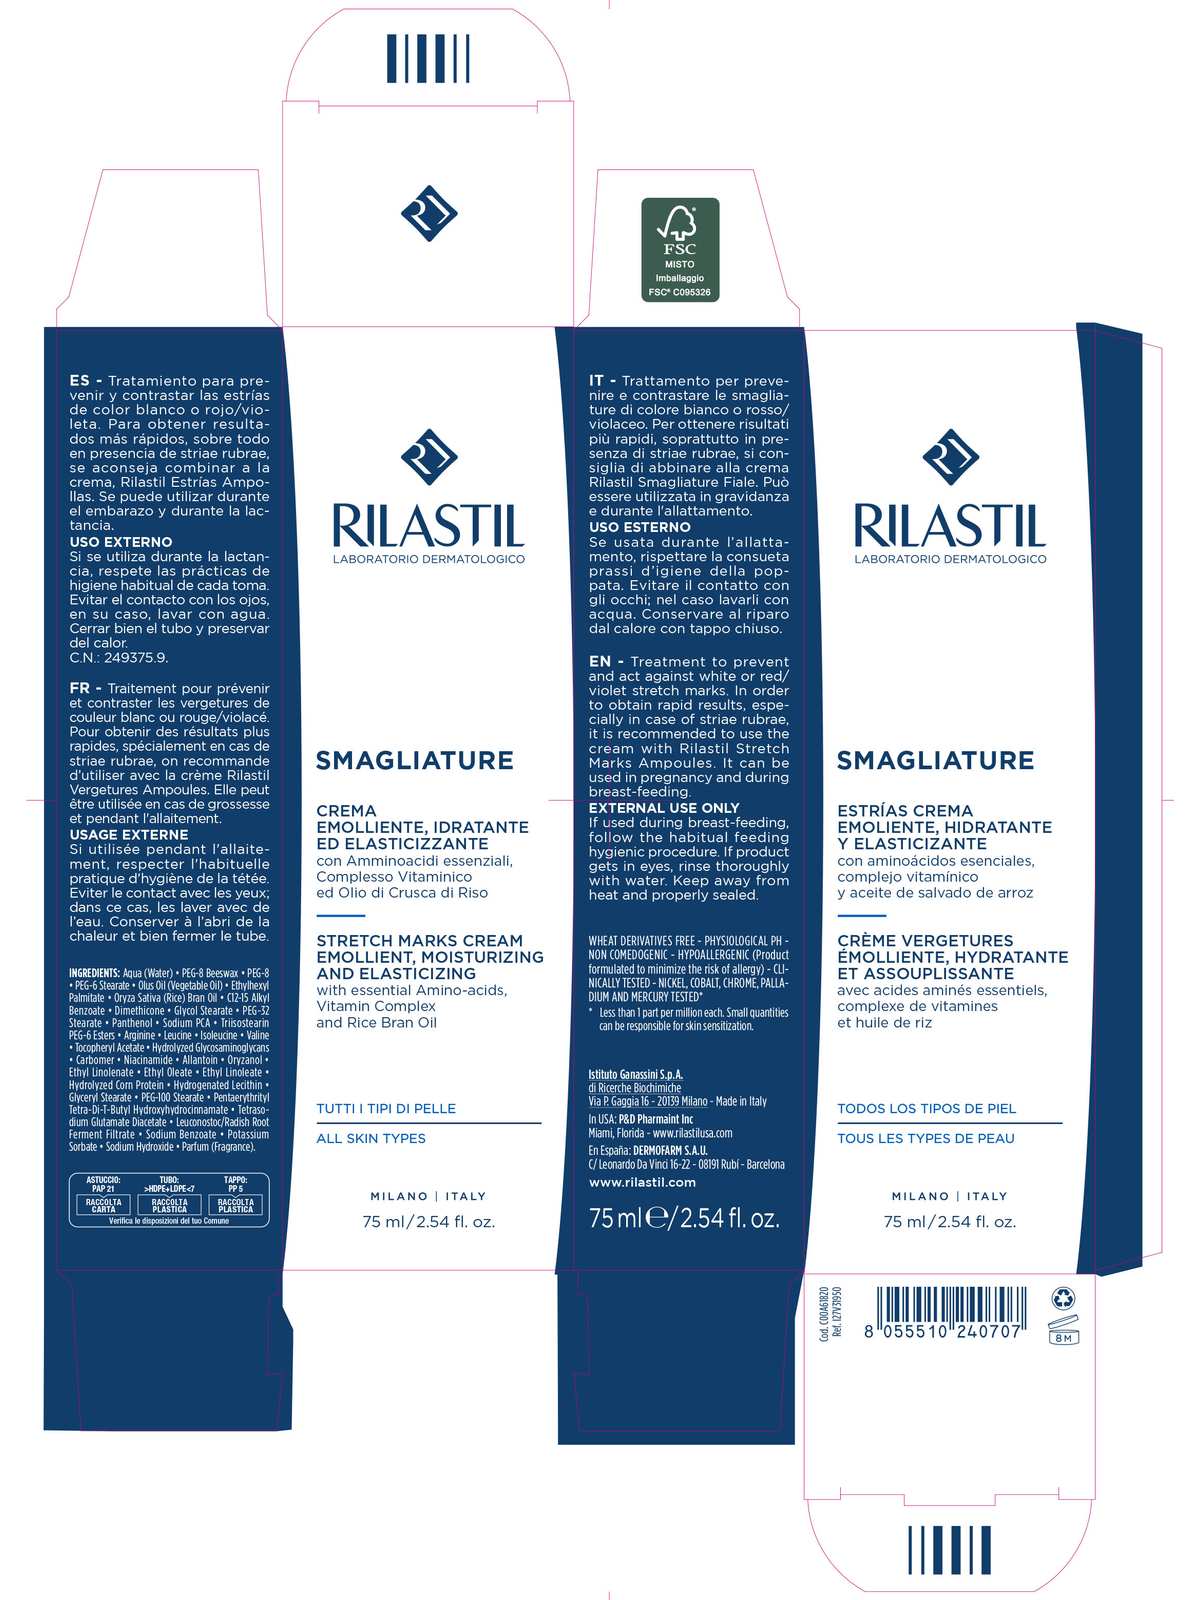 Rilastil - smagliature crema 75 ml 22 - RILASTIL